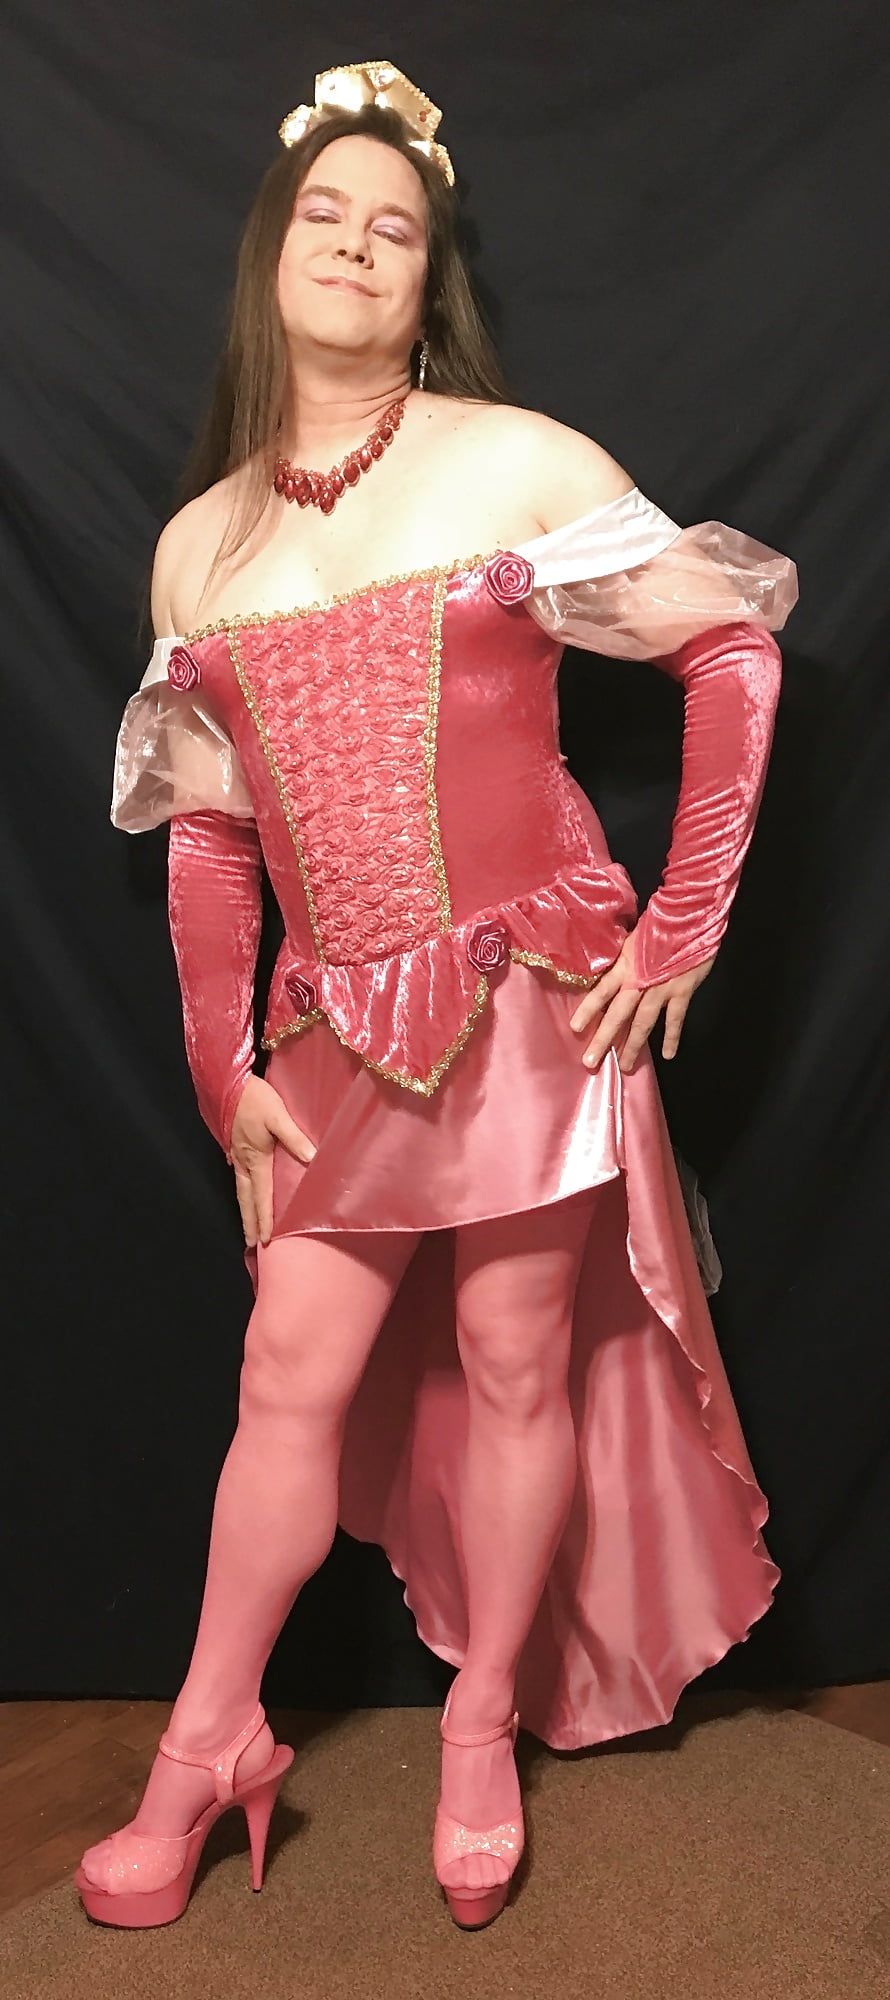 Joanie - Pink Princess #24